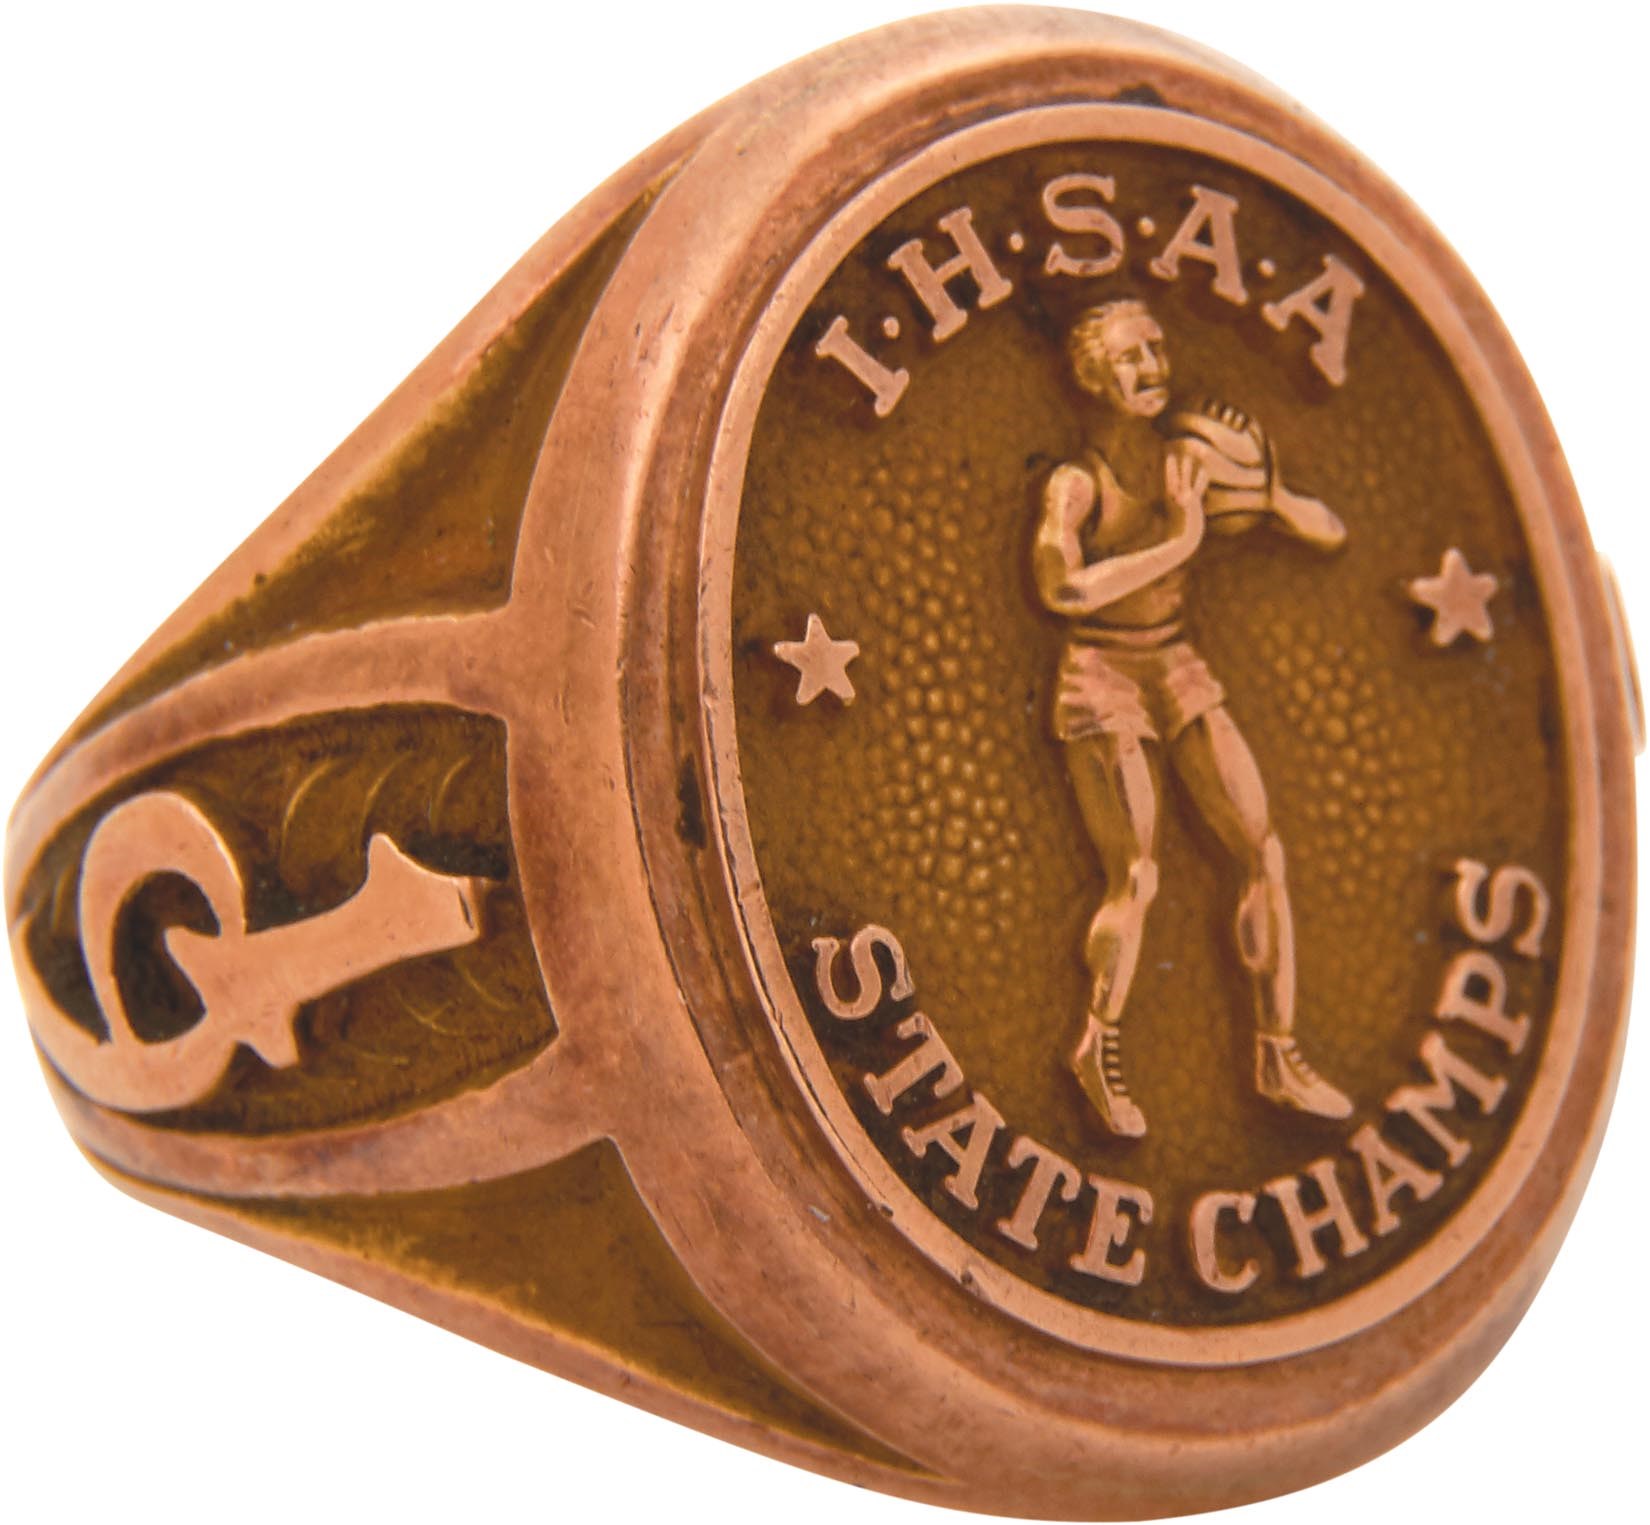 The Oscar Robertson Collection - 1956 Oscar Robertson Crispus Attucks Indiana High School Basketball Championship Ring